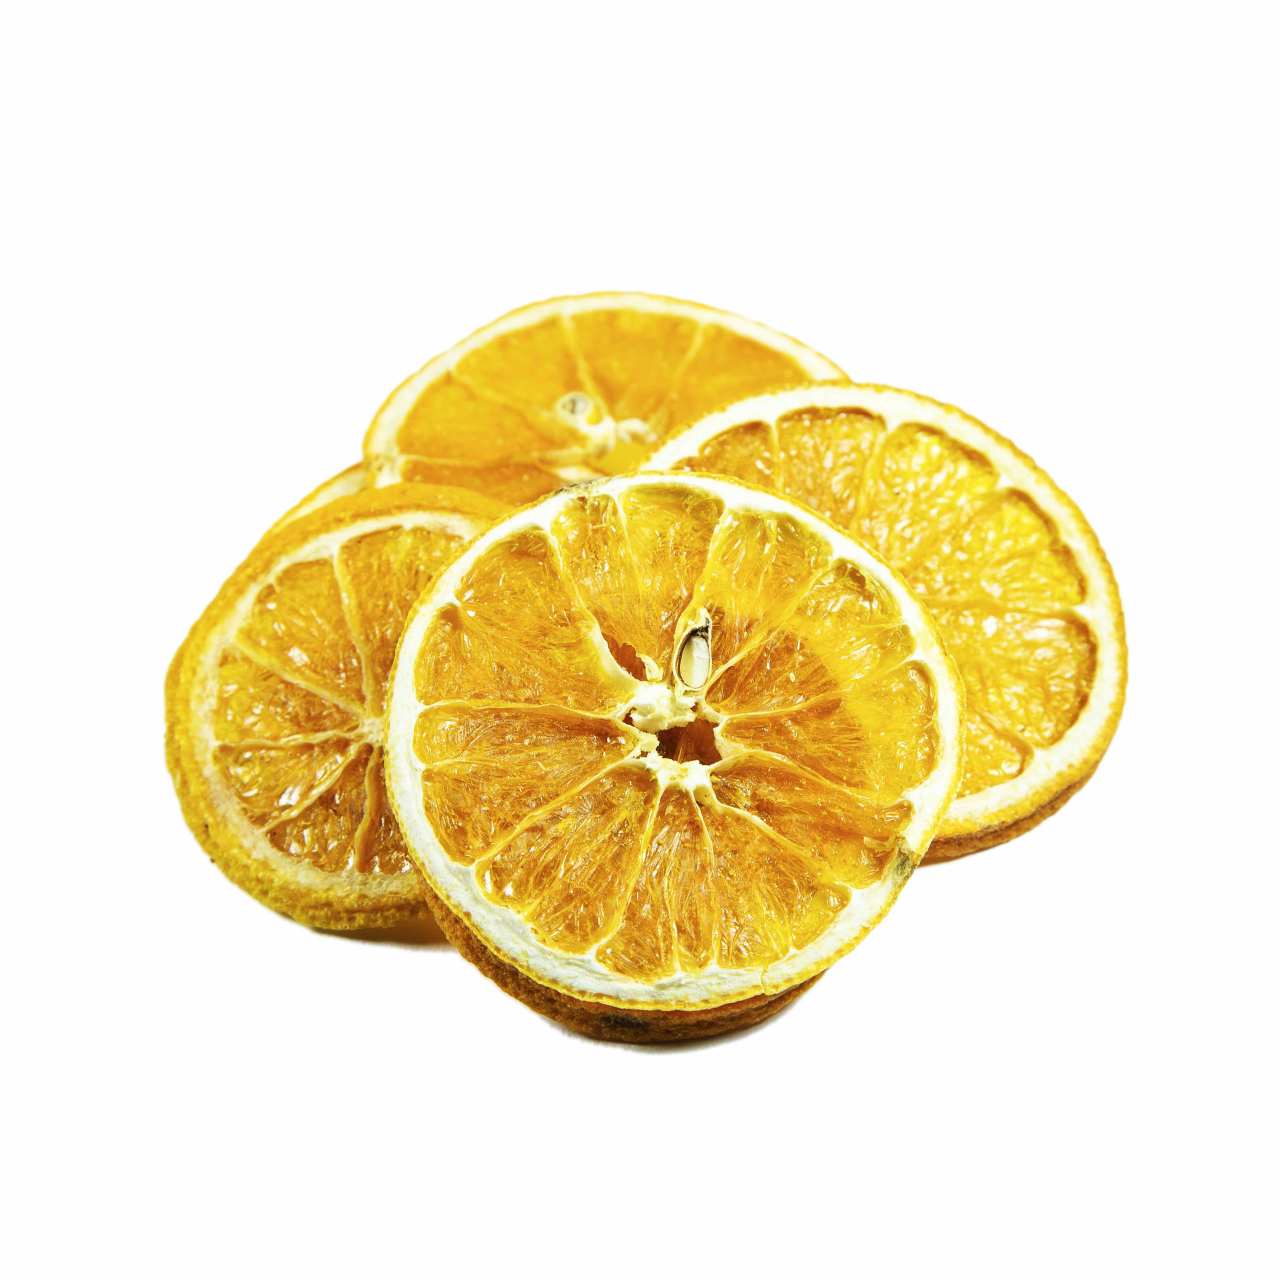 Kurutulmuş Limon Dilimi 5 kg